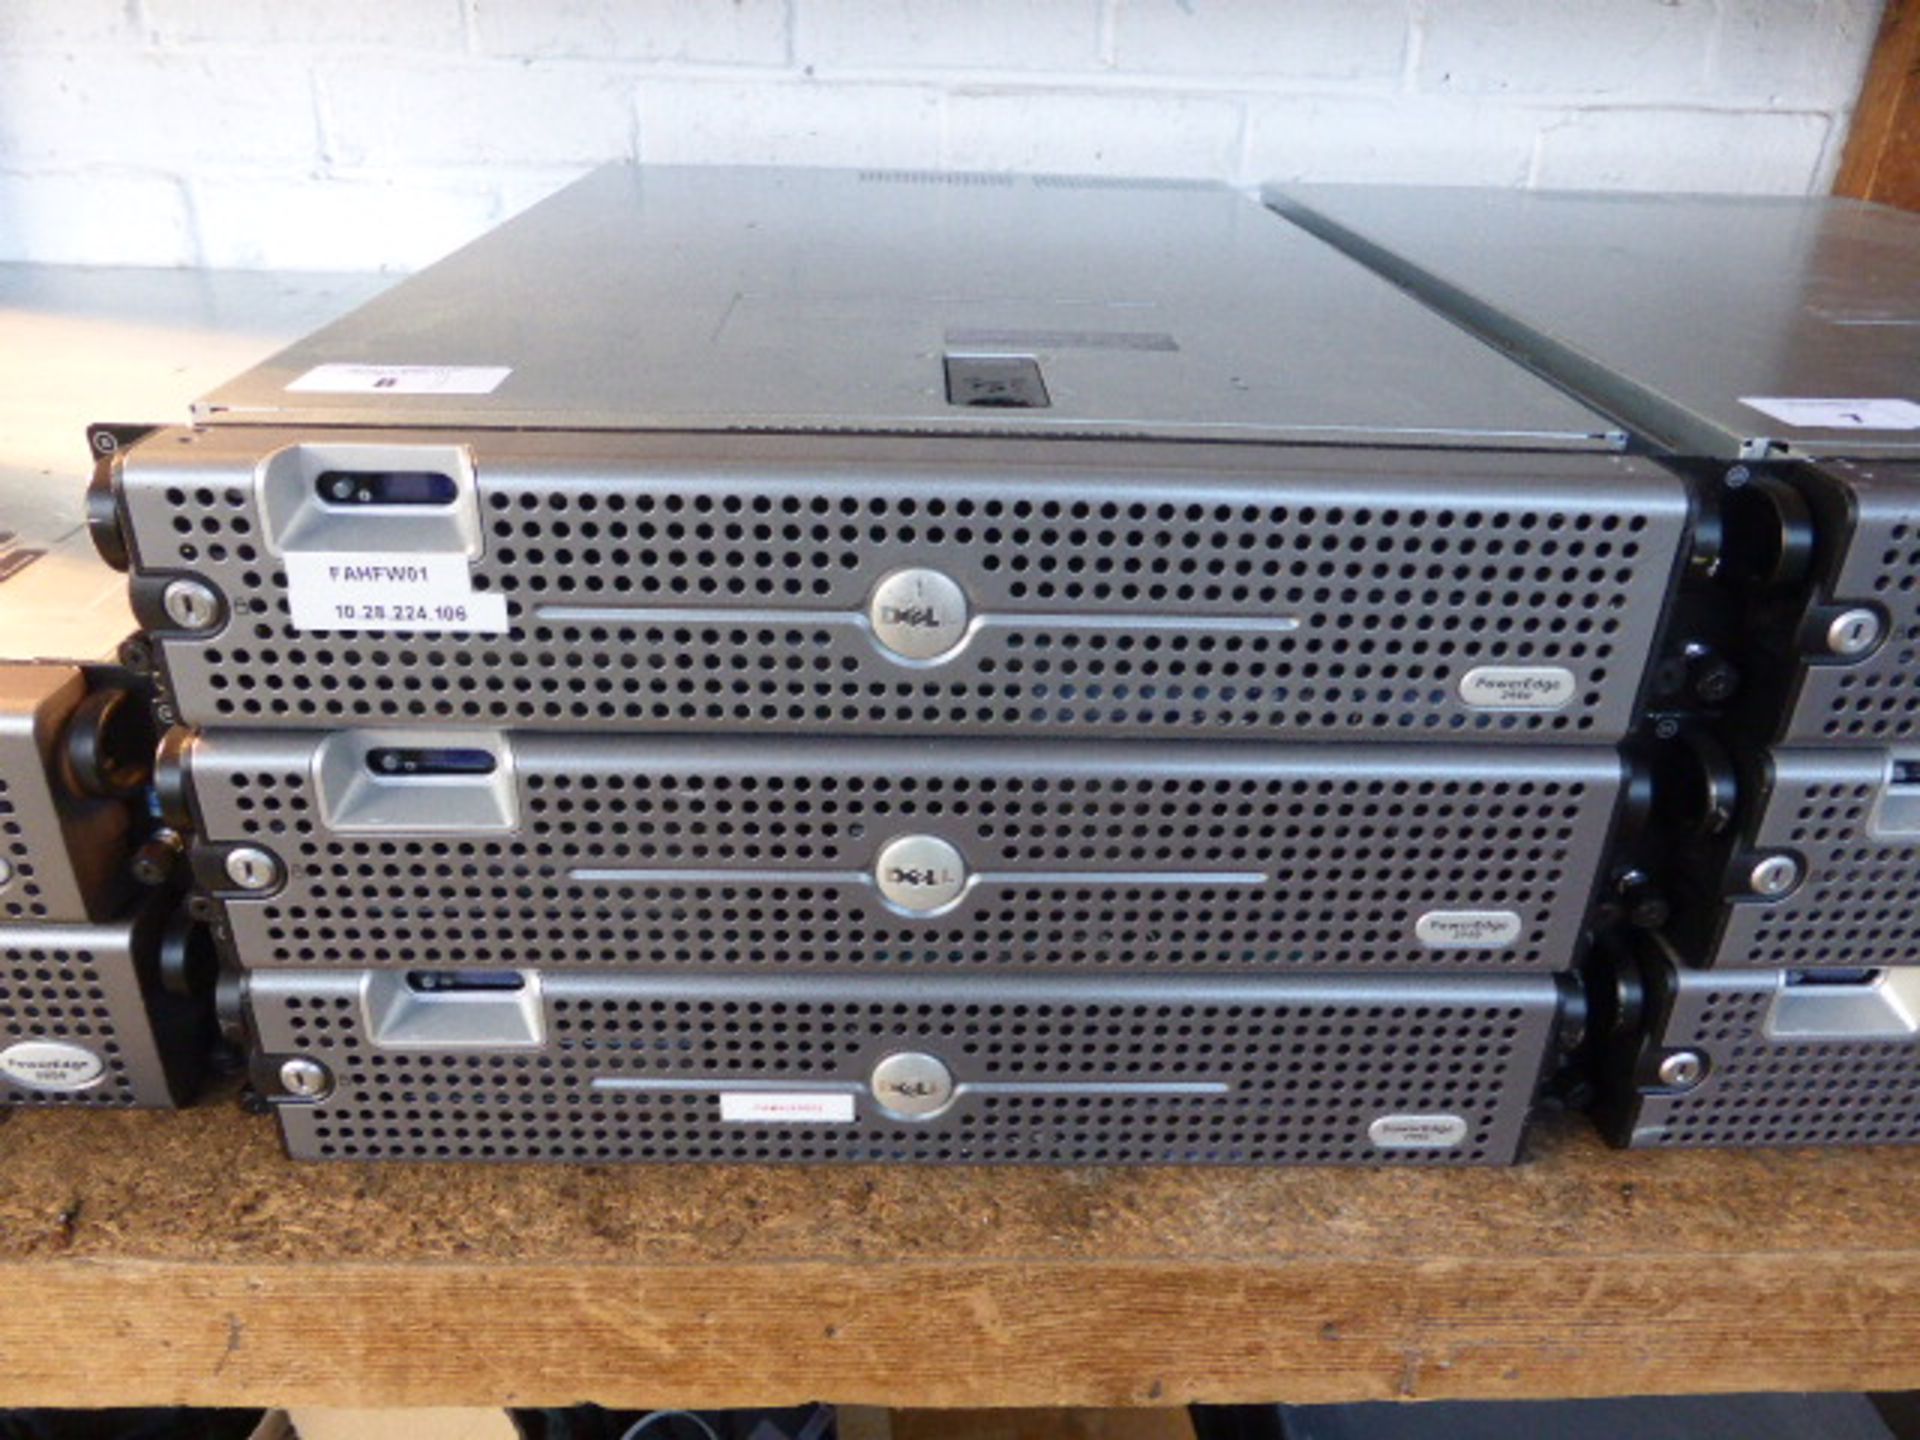 3 Dell PowerEdge 2950 rack mounted servers, no hard drives